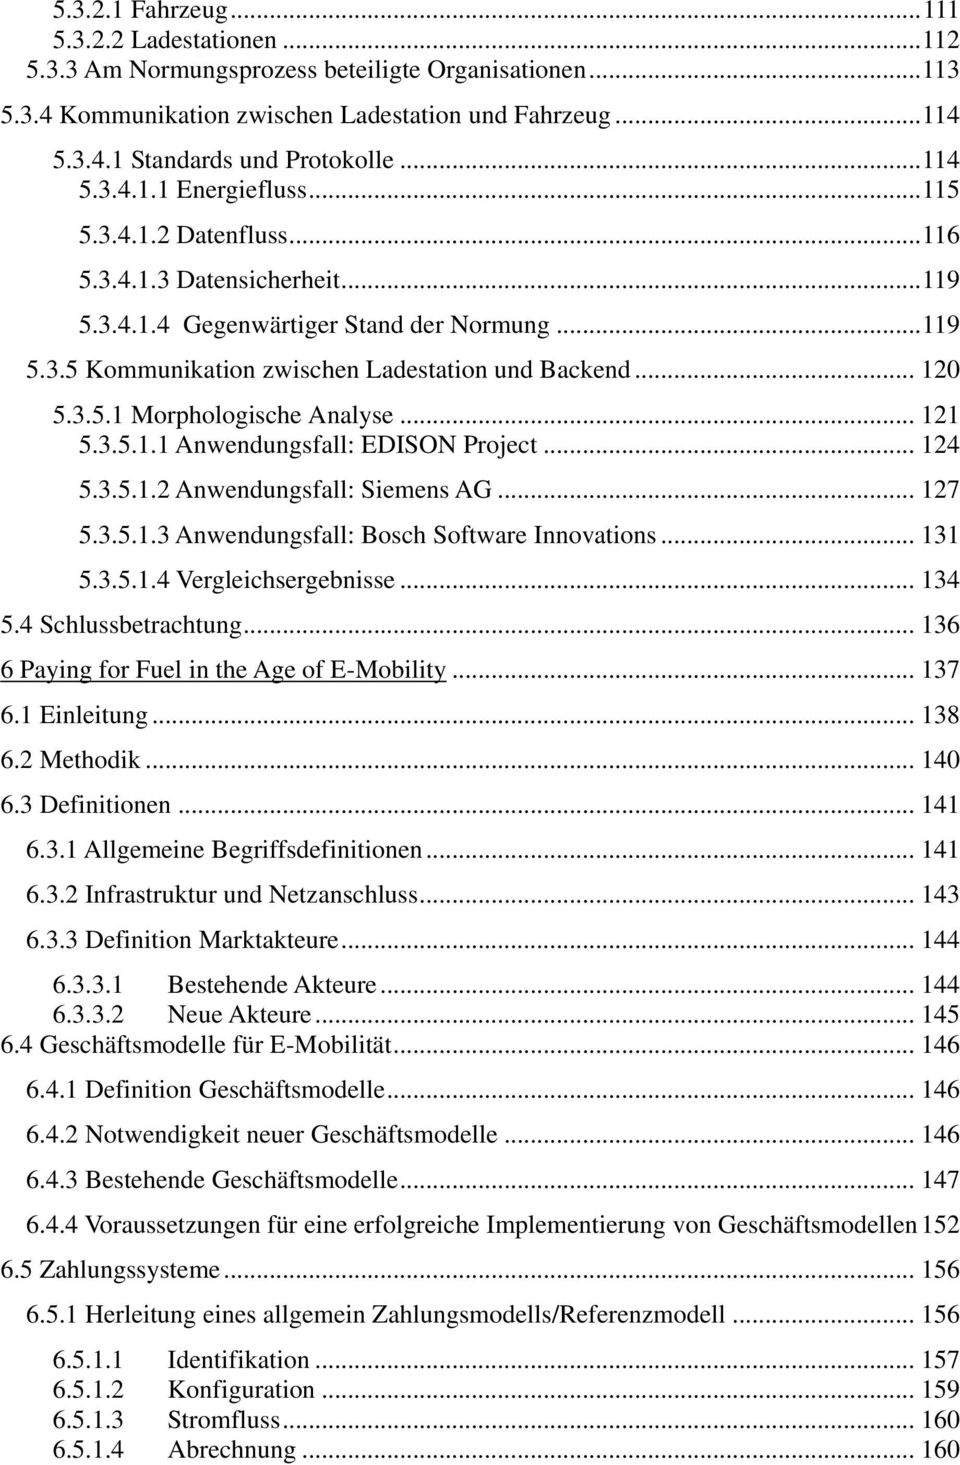 .. 120 5.3.5.1 Morphologische Analyse... 121 5.3.5.1.1 Anwendungsfall: EDISON Project... 124 5.3.5.1.2 Anwendungsfall: Siemens AG... 127 5.3.5.1.3 Anwendungsfall: Bosch Software Innovations... 131 5.